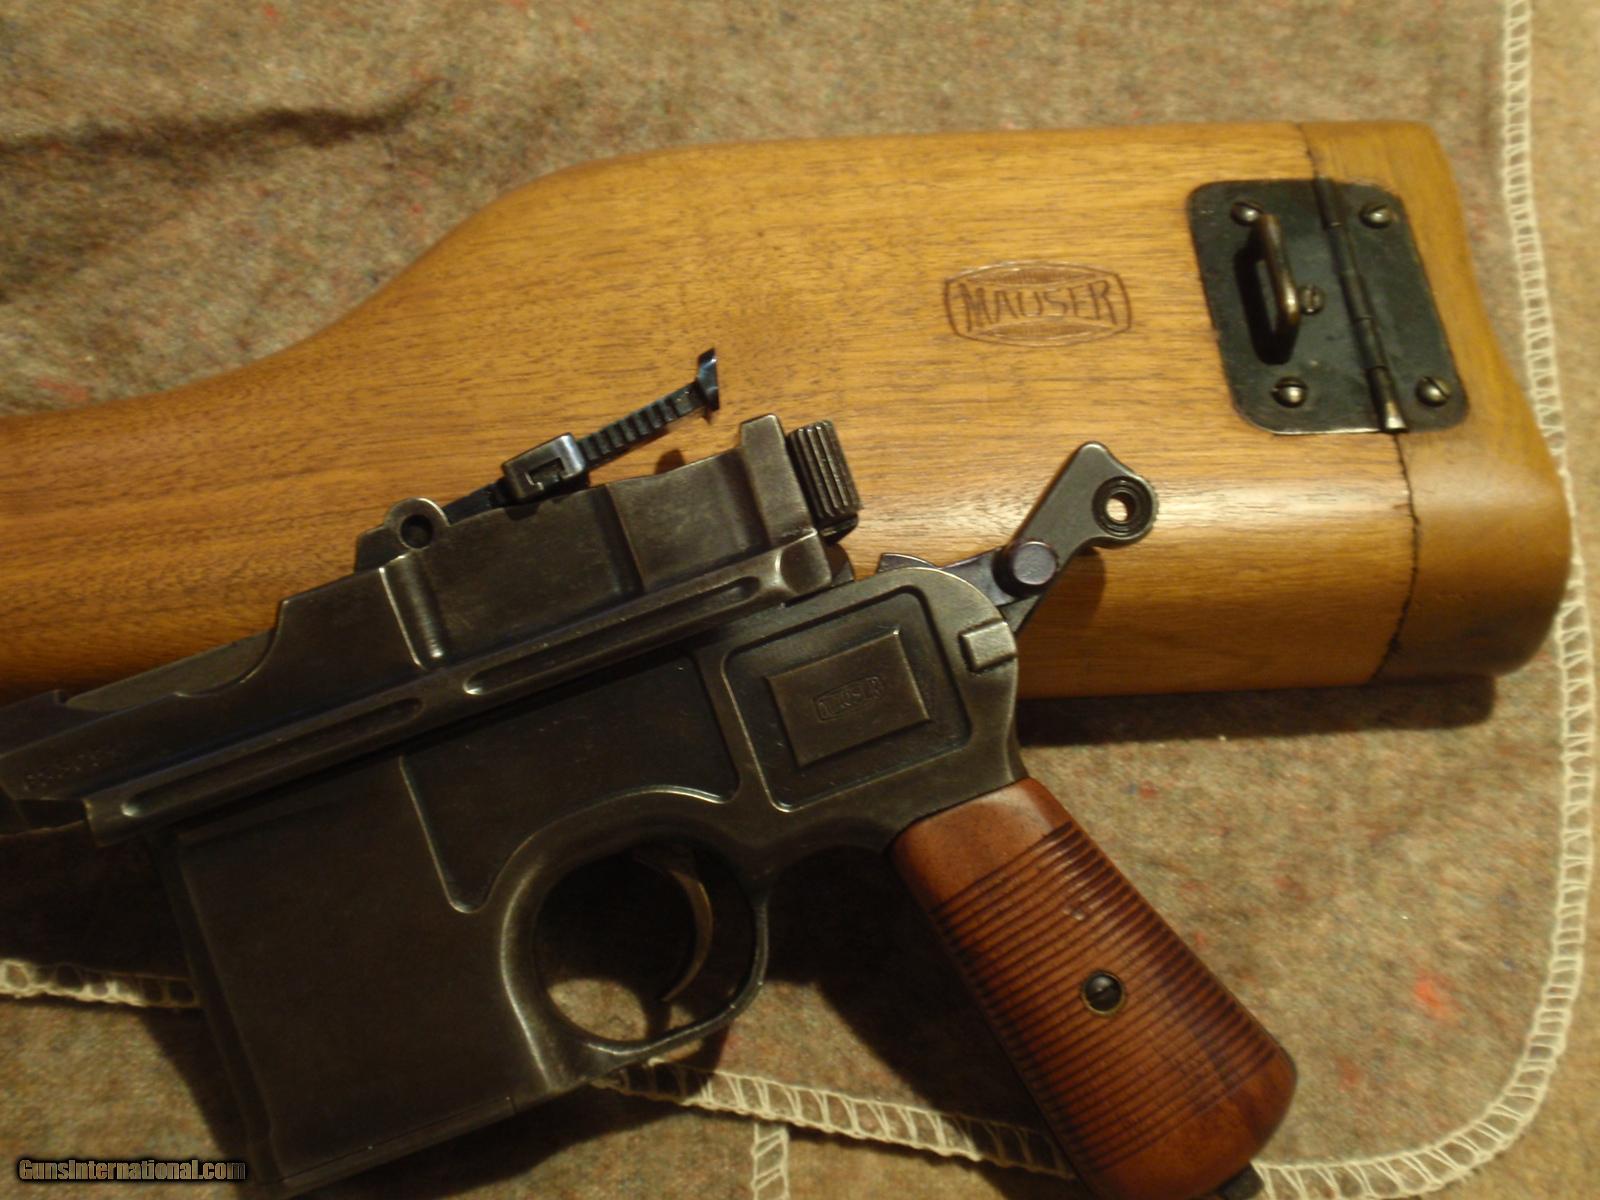 Mauser pistol serial numbers